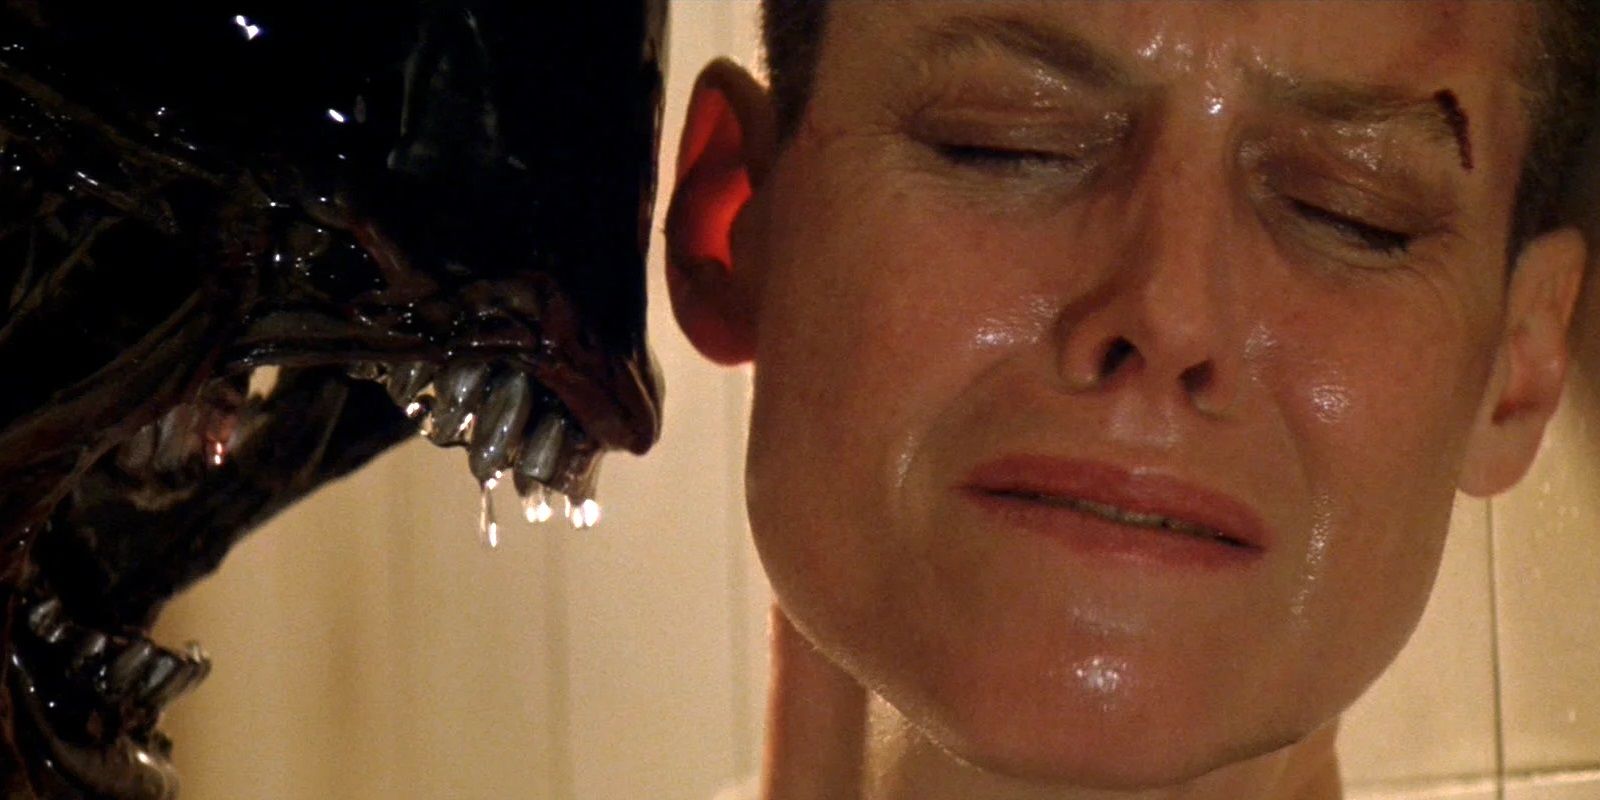 Ripley is attacked by a xenomorph in Alien 3